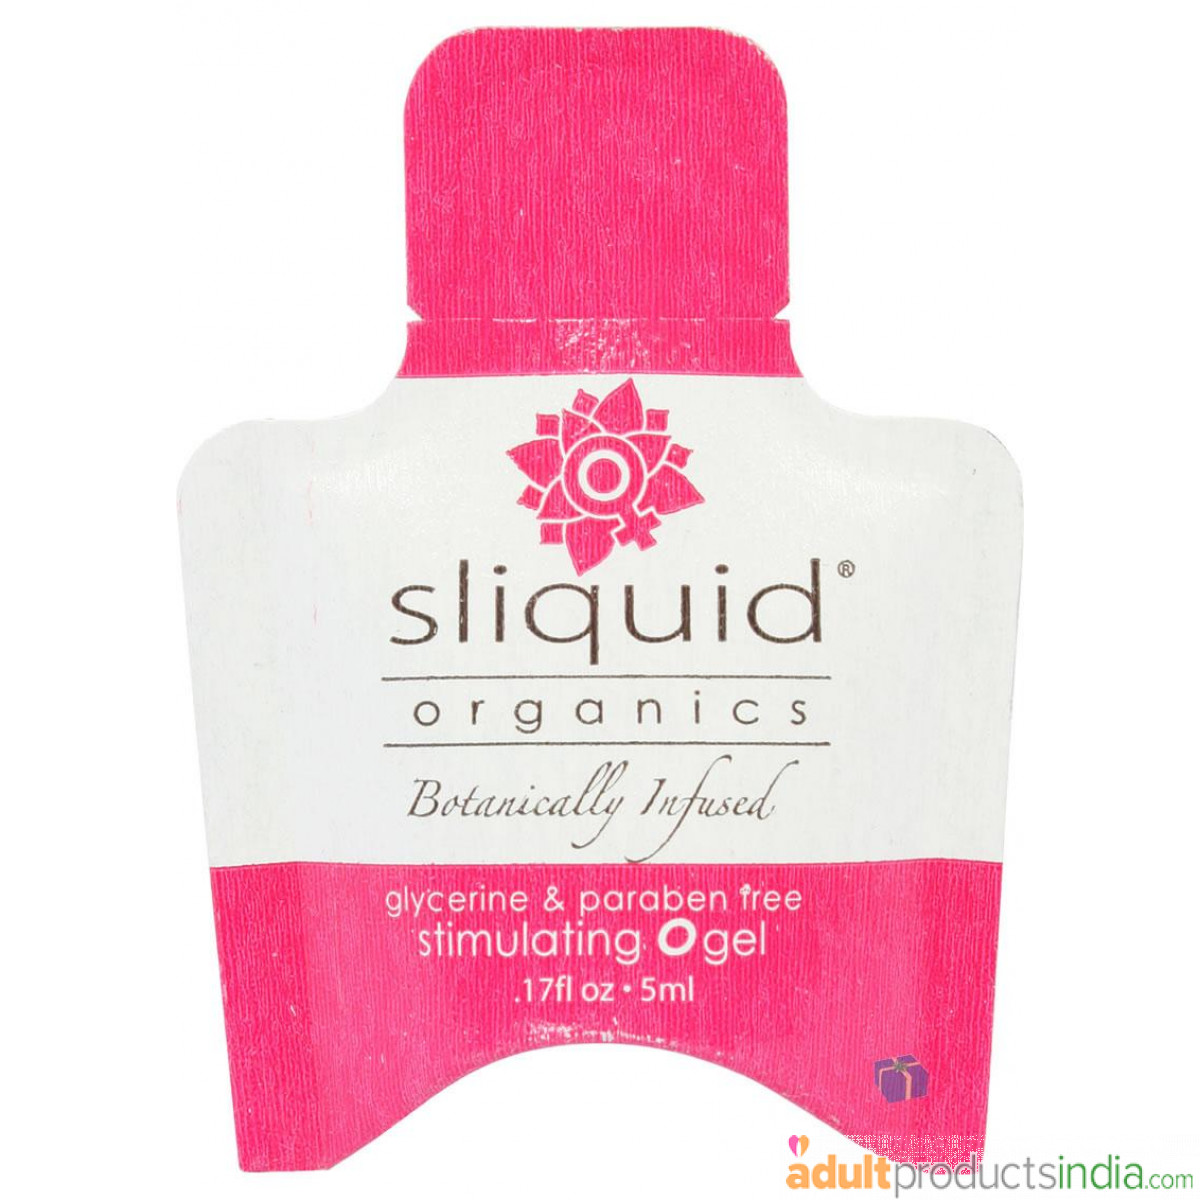 Sliquid Organics Stimulating O Gel Sampler 6 Pack